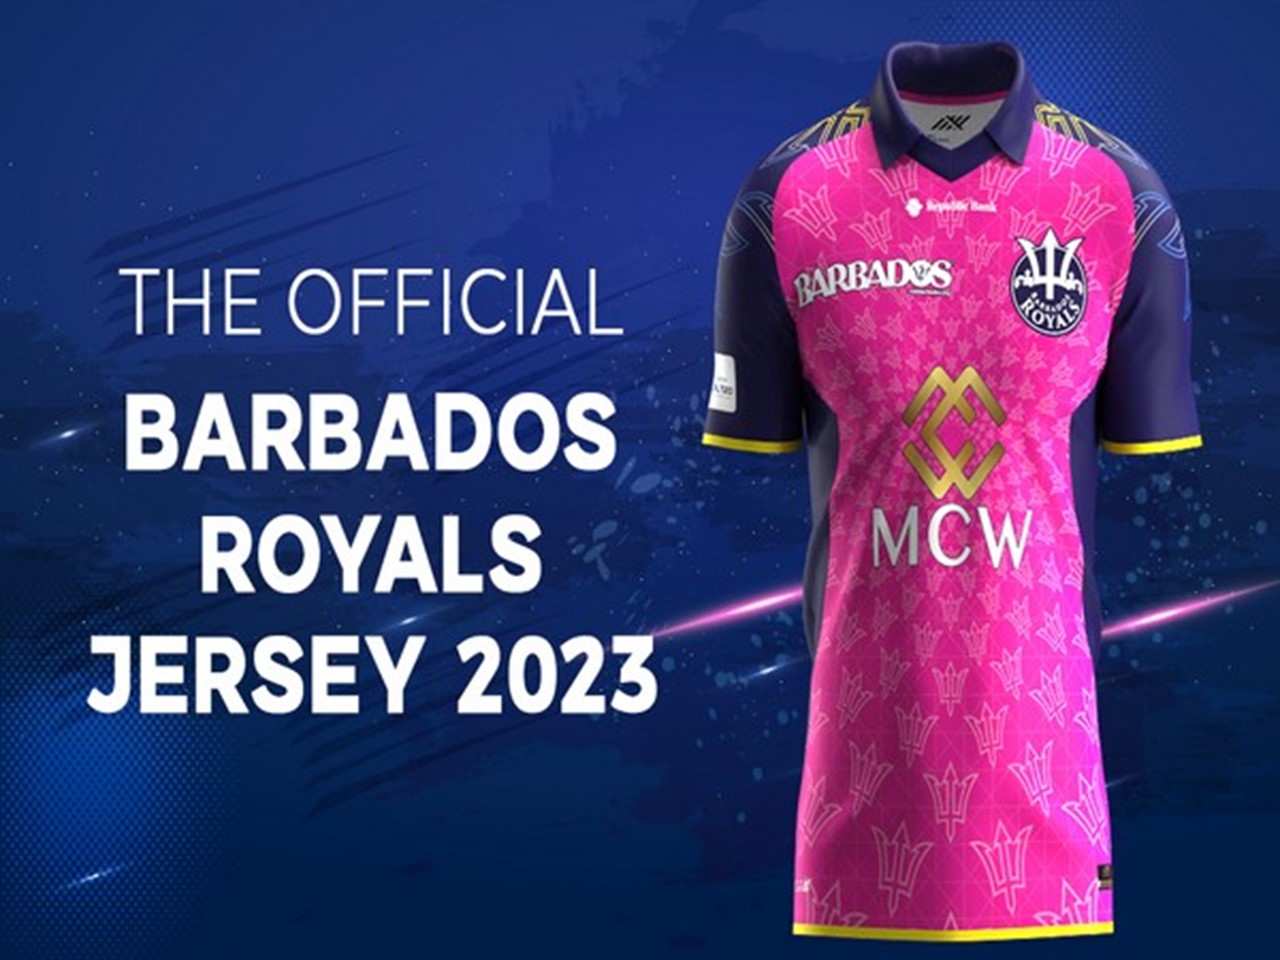 Barbados Royals unveil new jersey for Caribbean Premier League